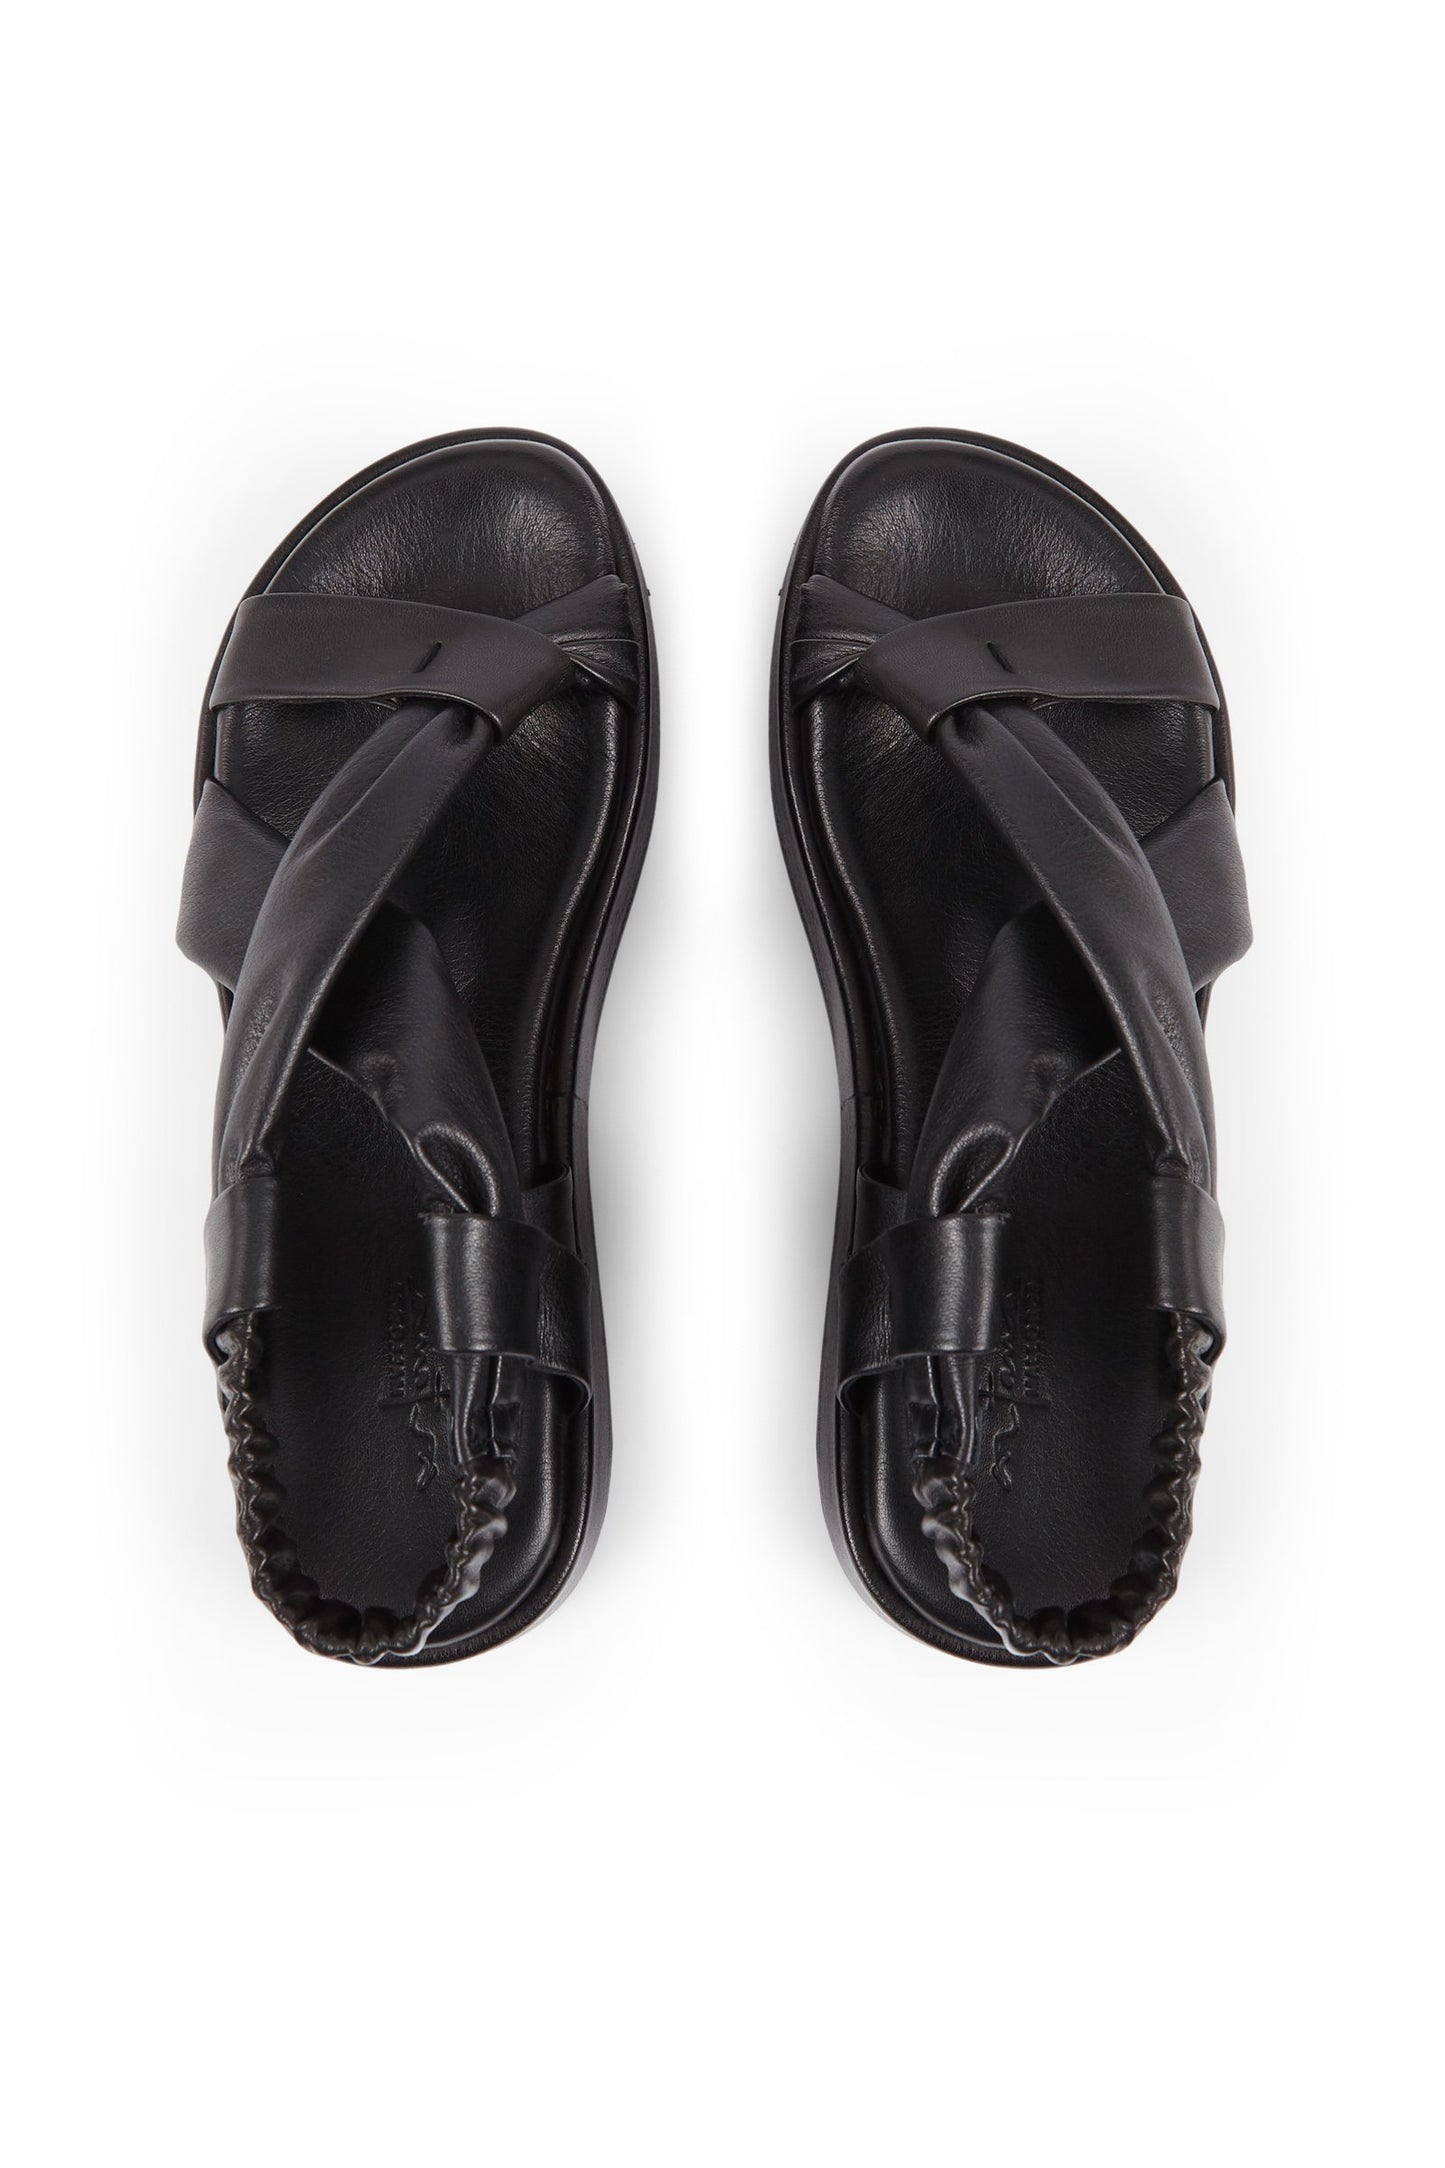 Suro, black leather sandals